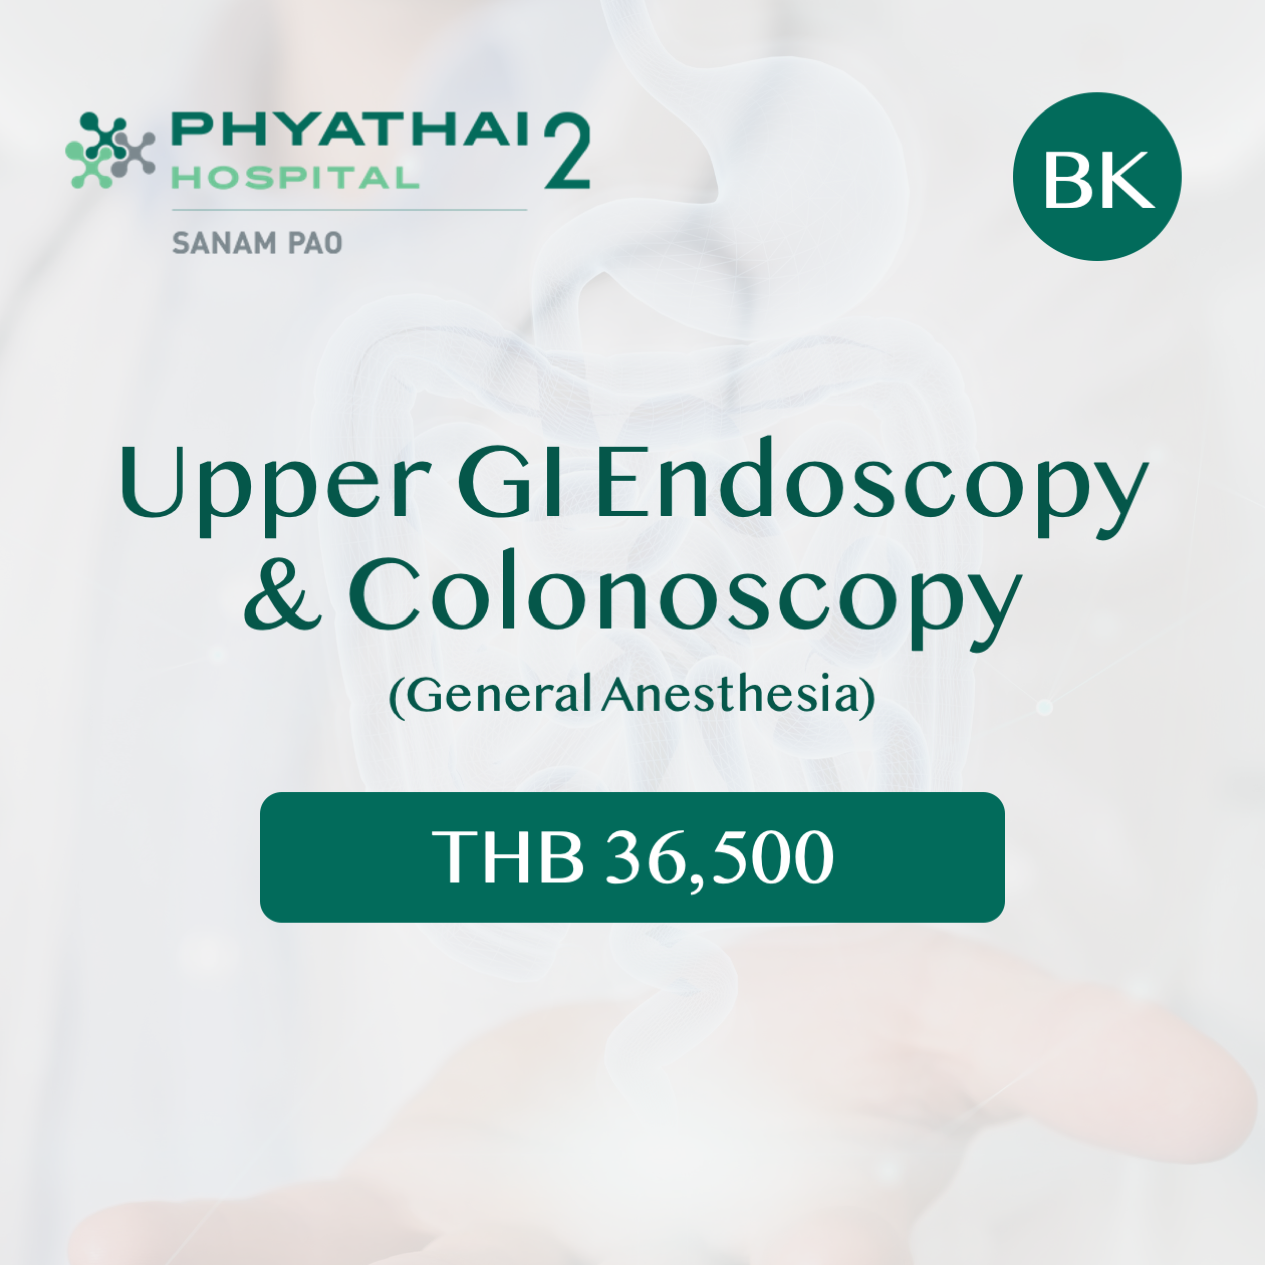 Phyathai 2 (BK) Upper GI Endoscopy & Colonoscopy (General Anesthesia)